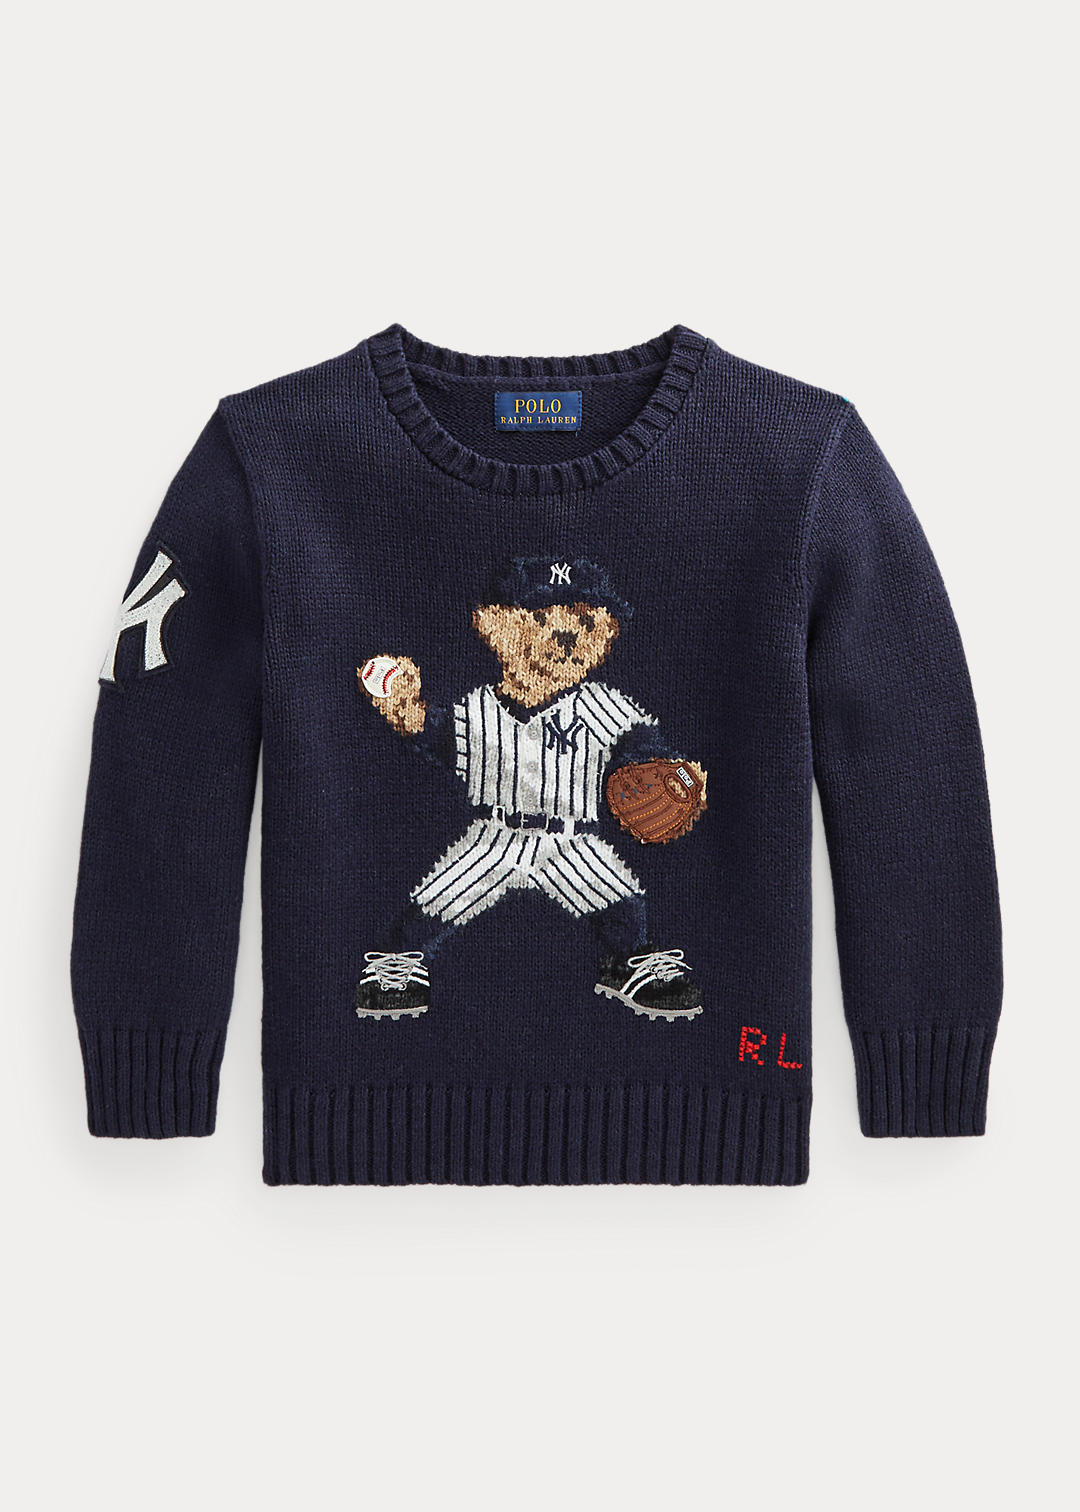 Polo Ralph Lauren Yankees Bear Sweater